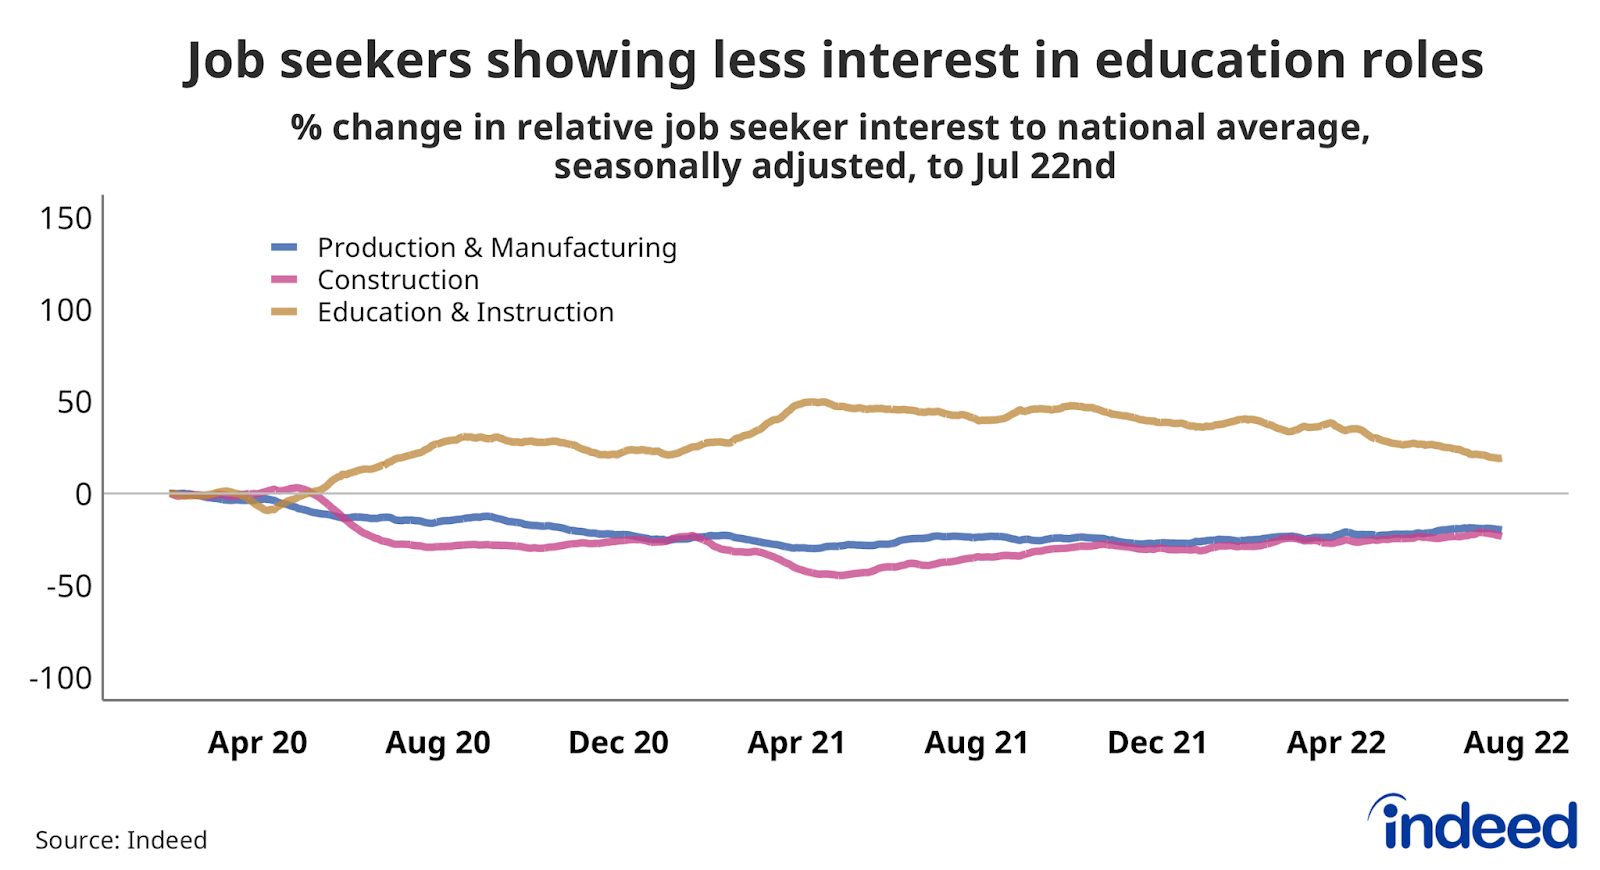 Line chart showing the % change in job seeker interest in education roles.